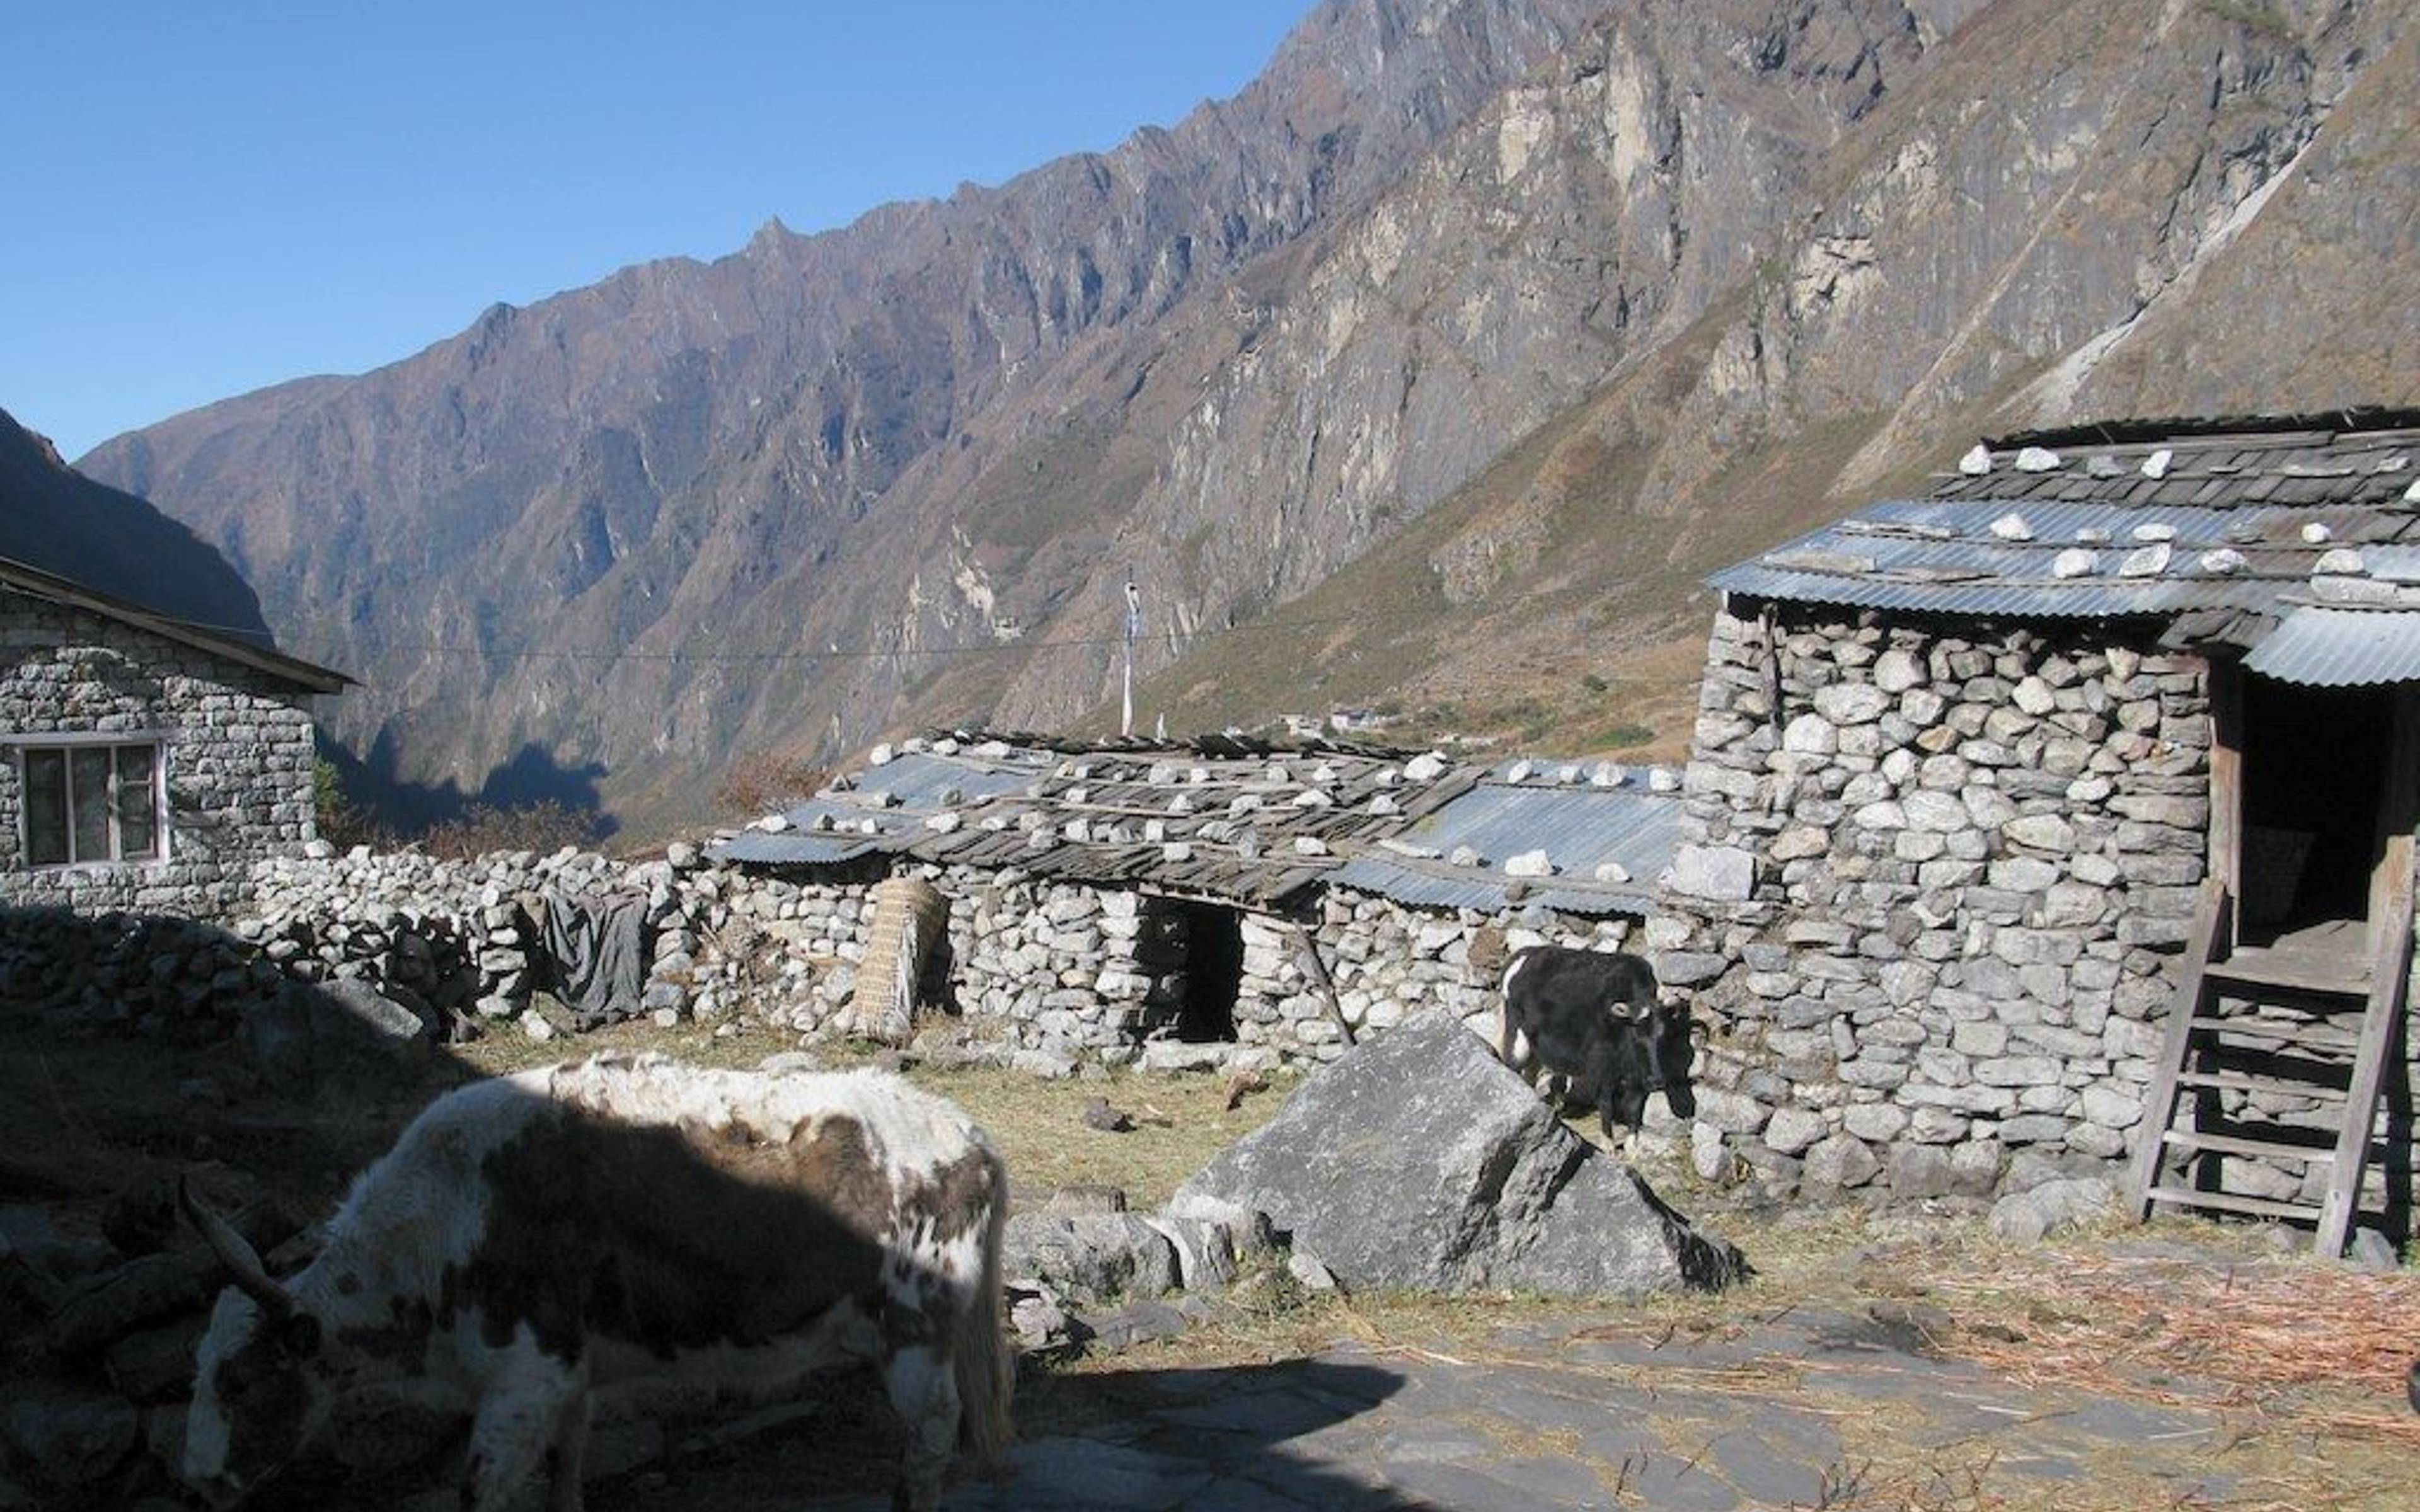 Lama Hotel - Langtang Dorf (3430 m) - 5 Stunden Wanderung